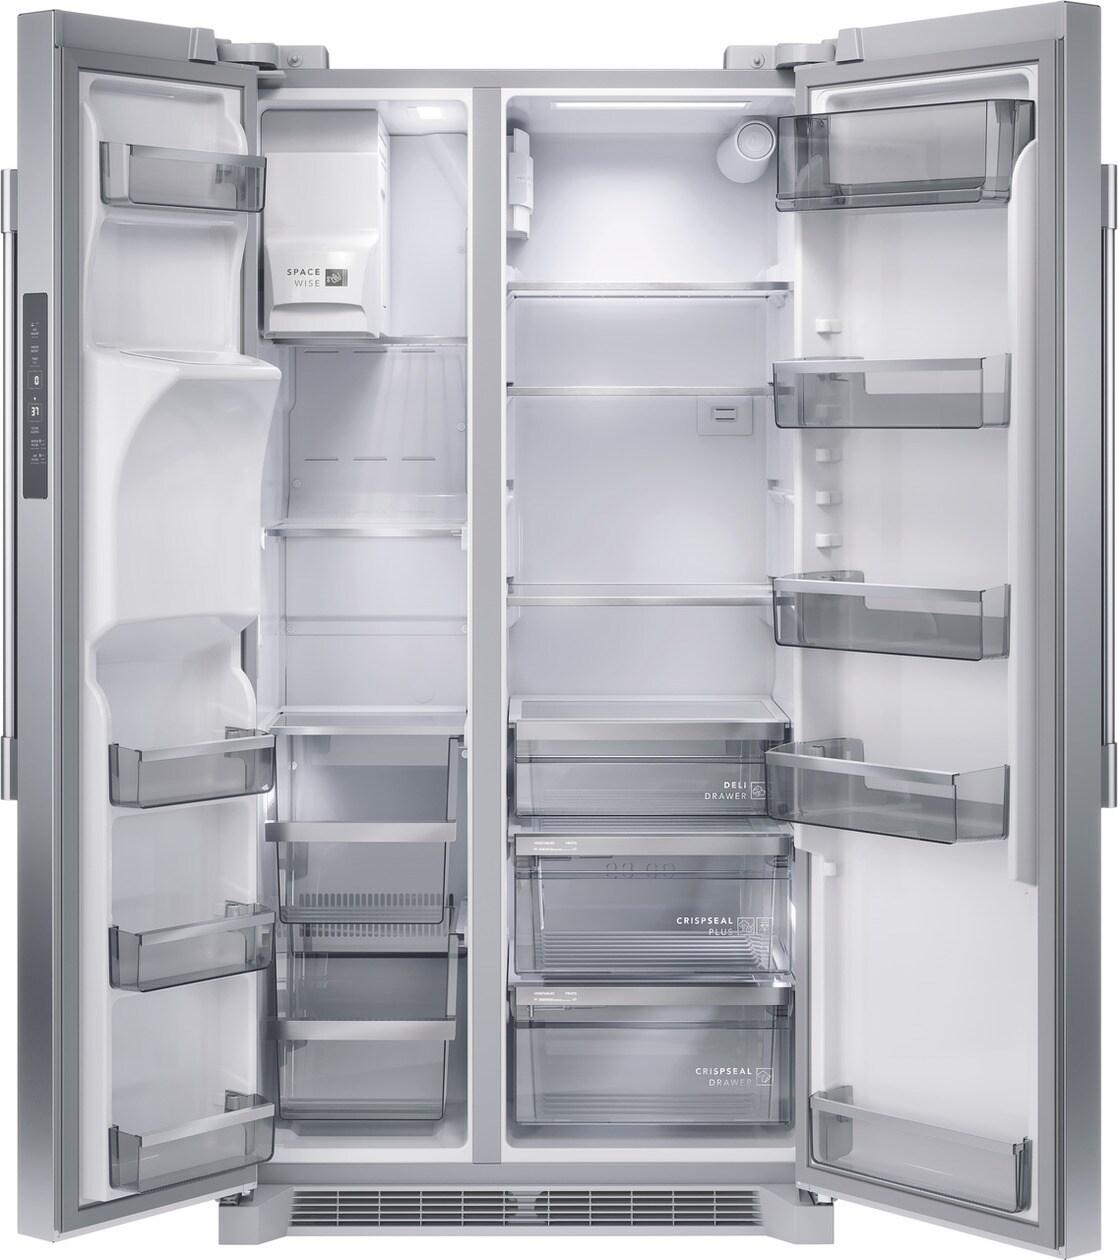 Frigidaire PRSC2222AF Frigidaire Professional 22.3 Cu. Ft. 36" Counter Depth Side By Side Refrigerator